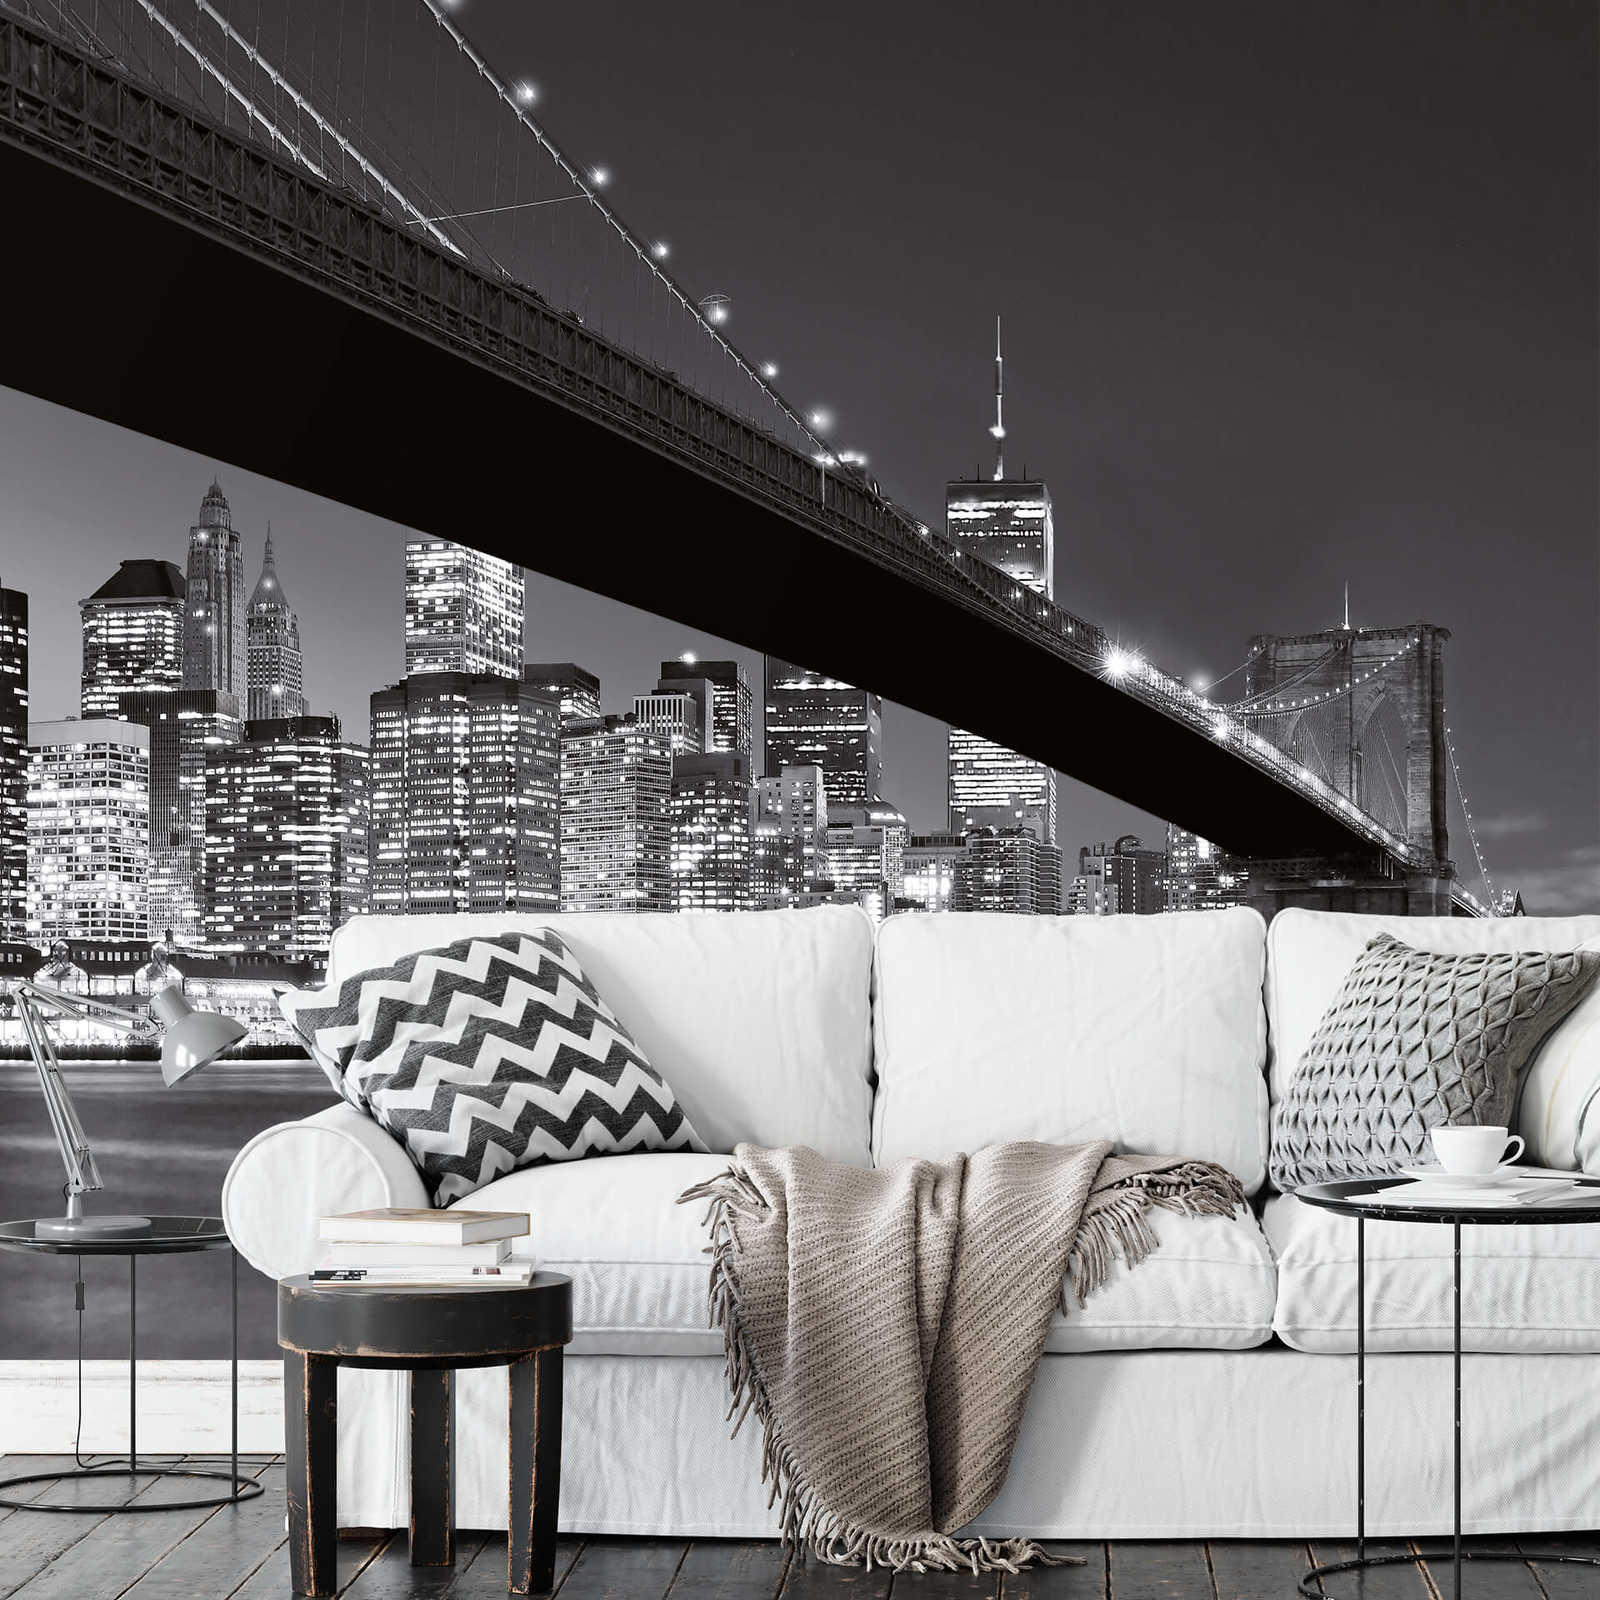             Fototapete Brooklyn Bridge New York in Schwarz-Weiß
        